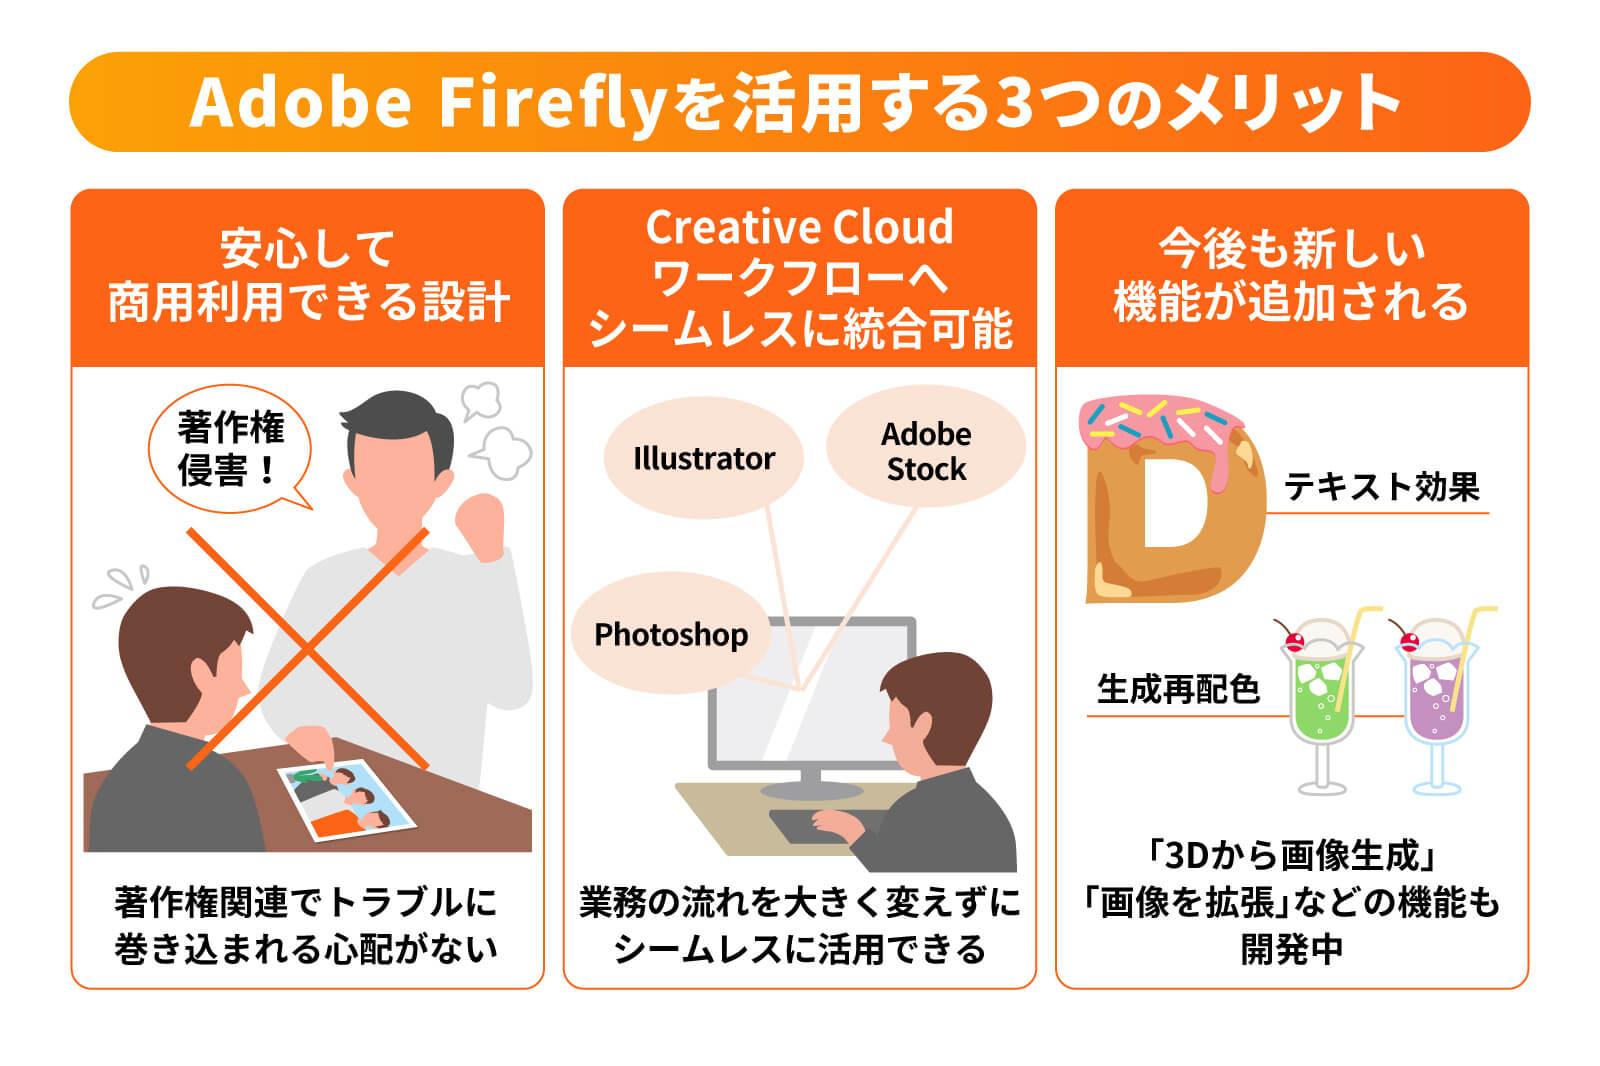 Adobe Fireflyを活用する3つのメリット